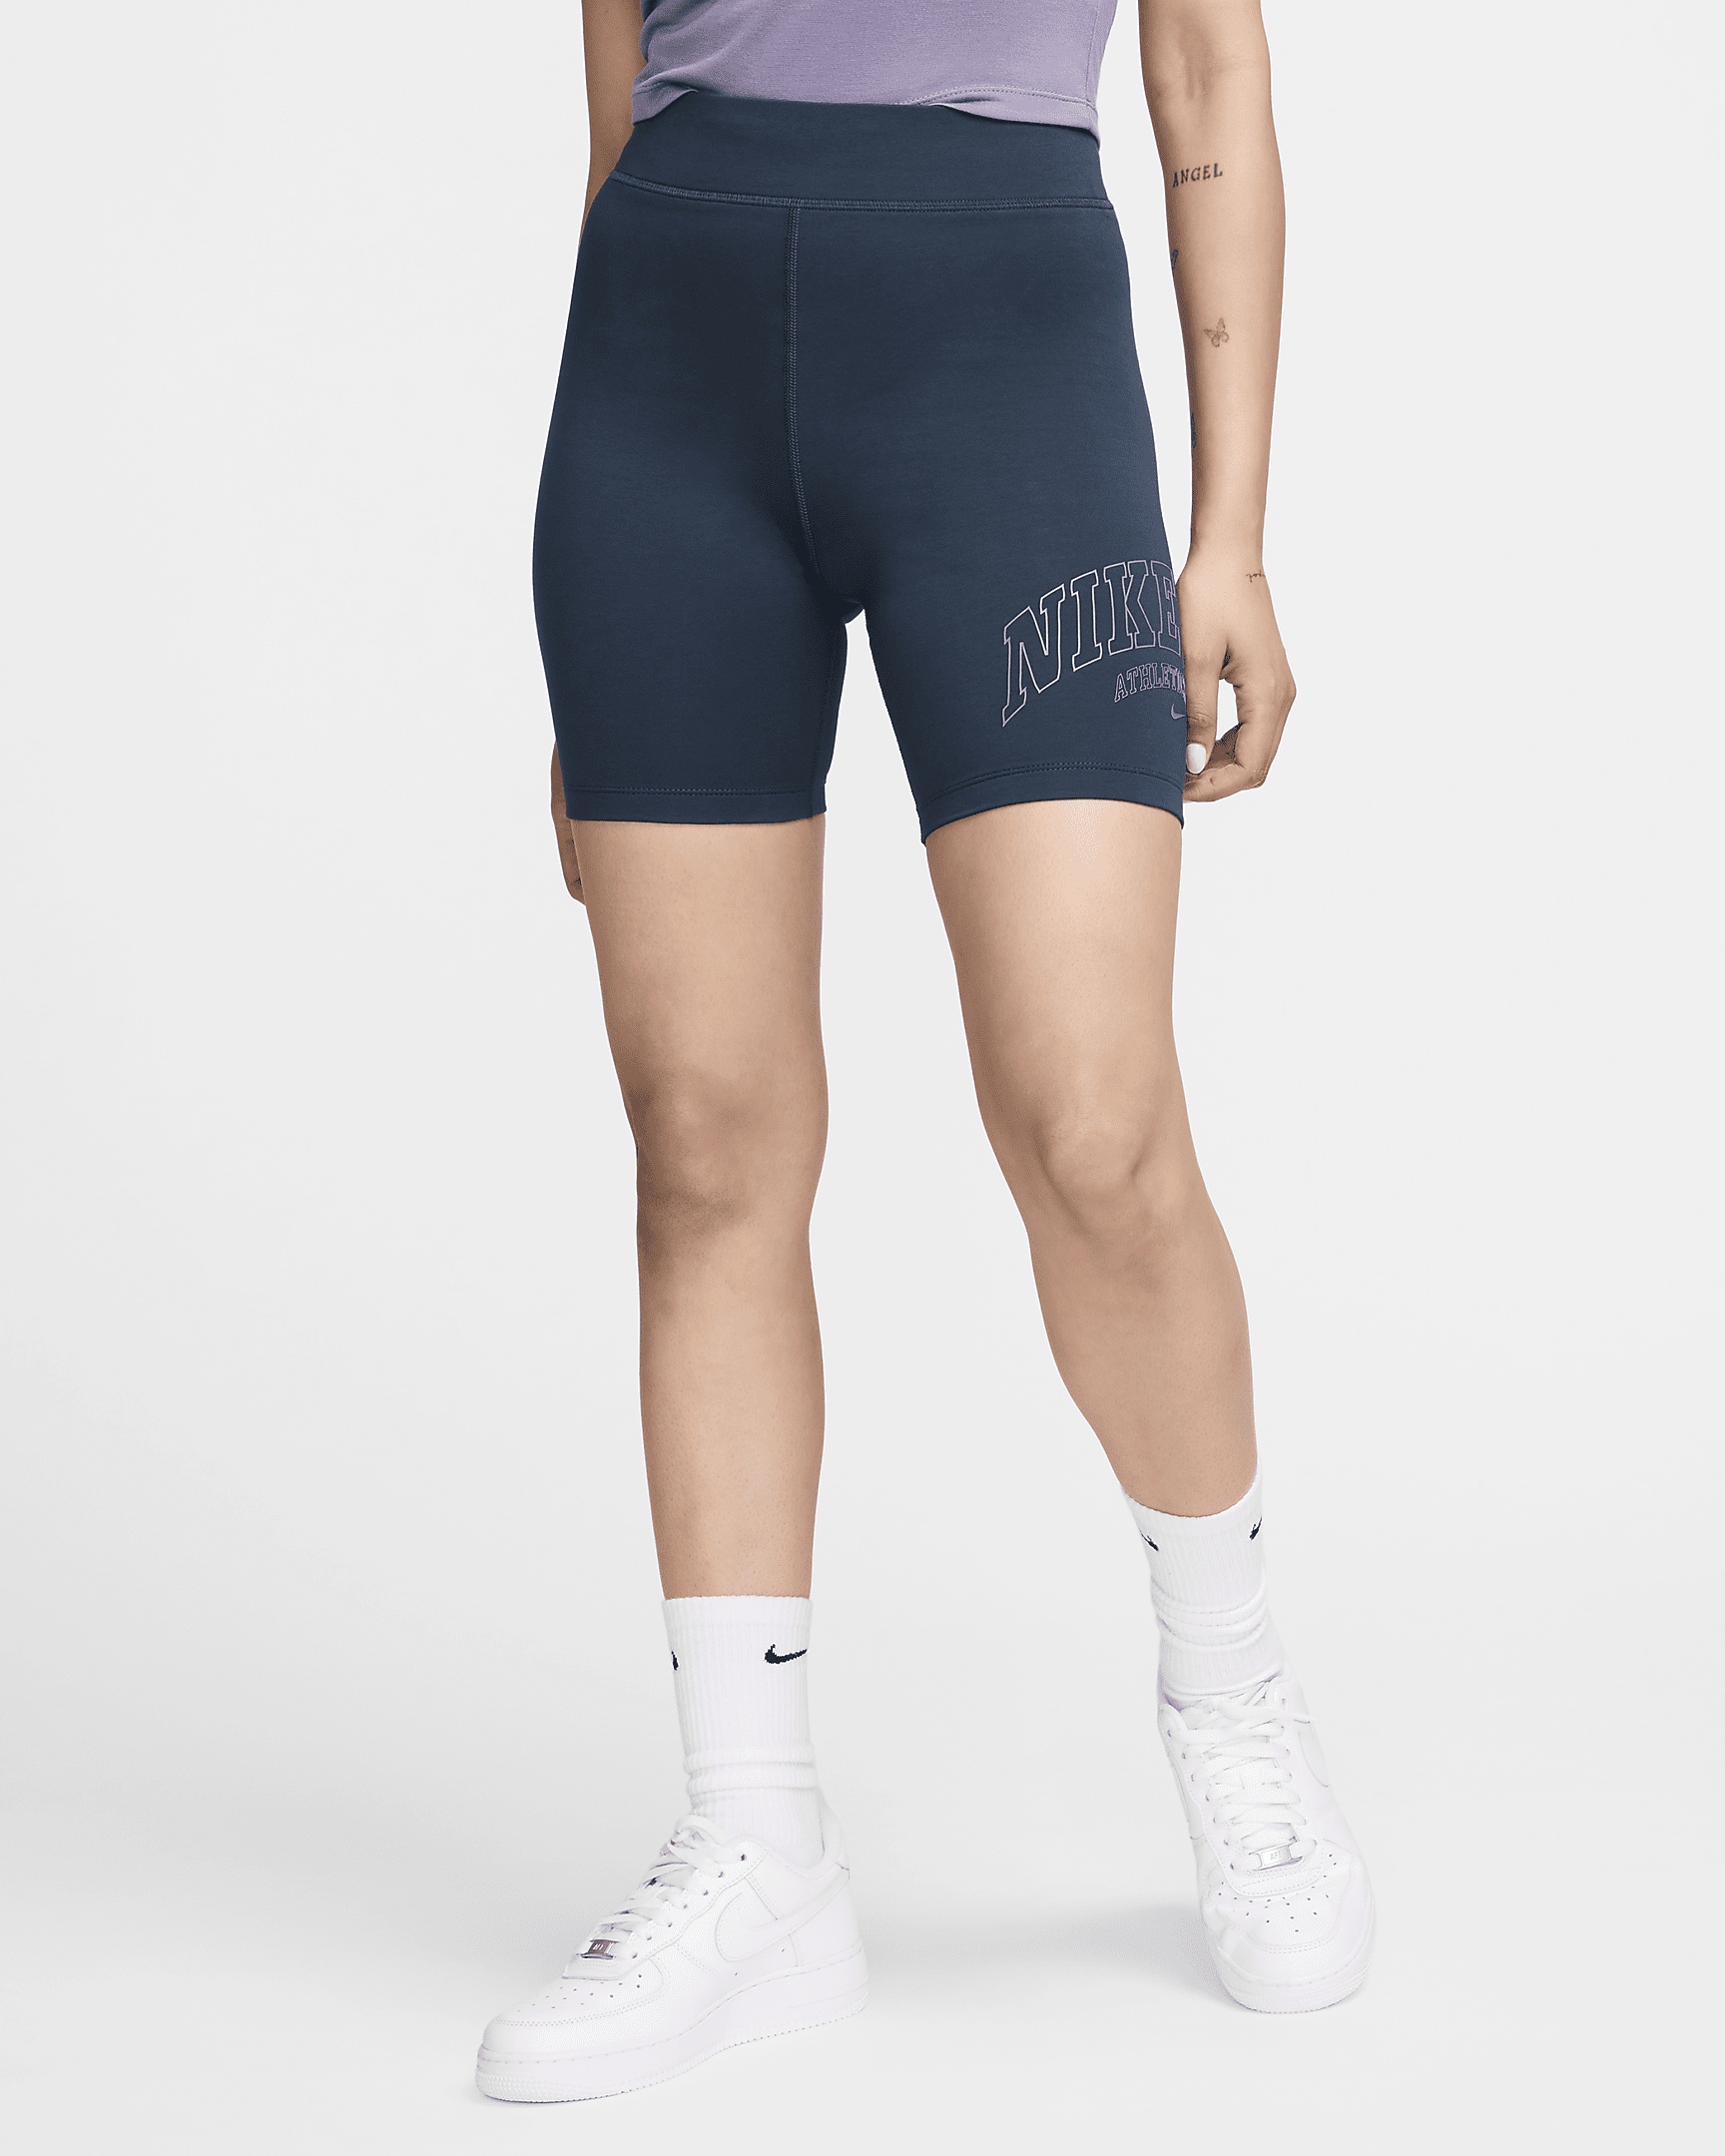 Women's Nike Sportswear Classic High-Waisted 8" Biker Shorts - 1